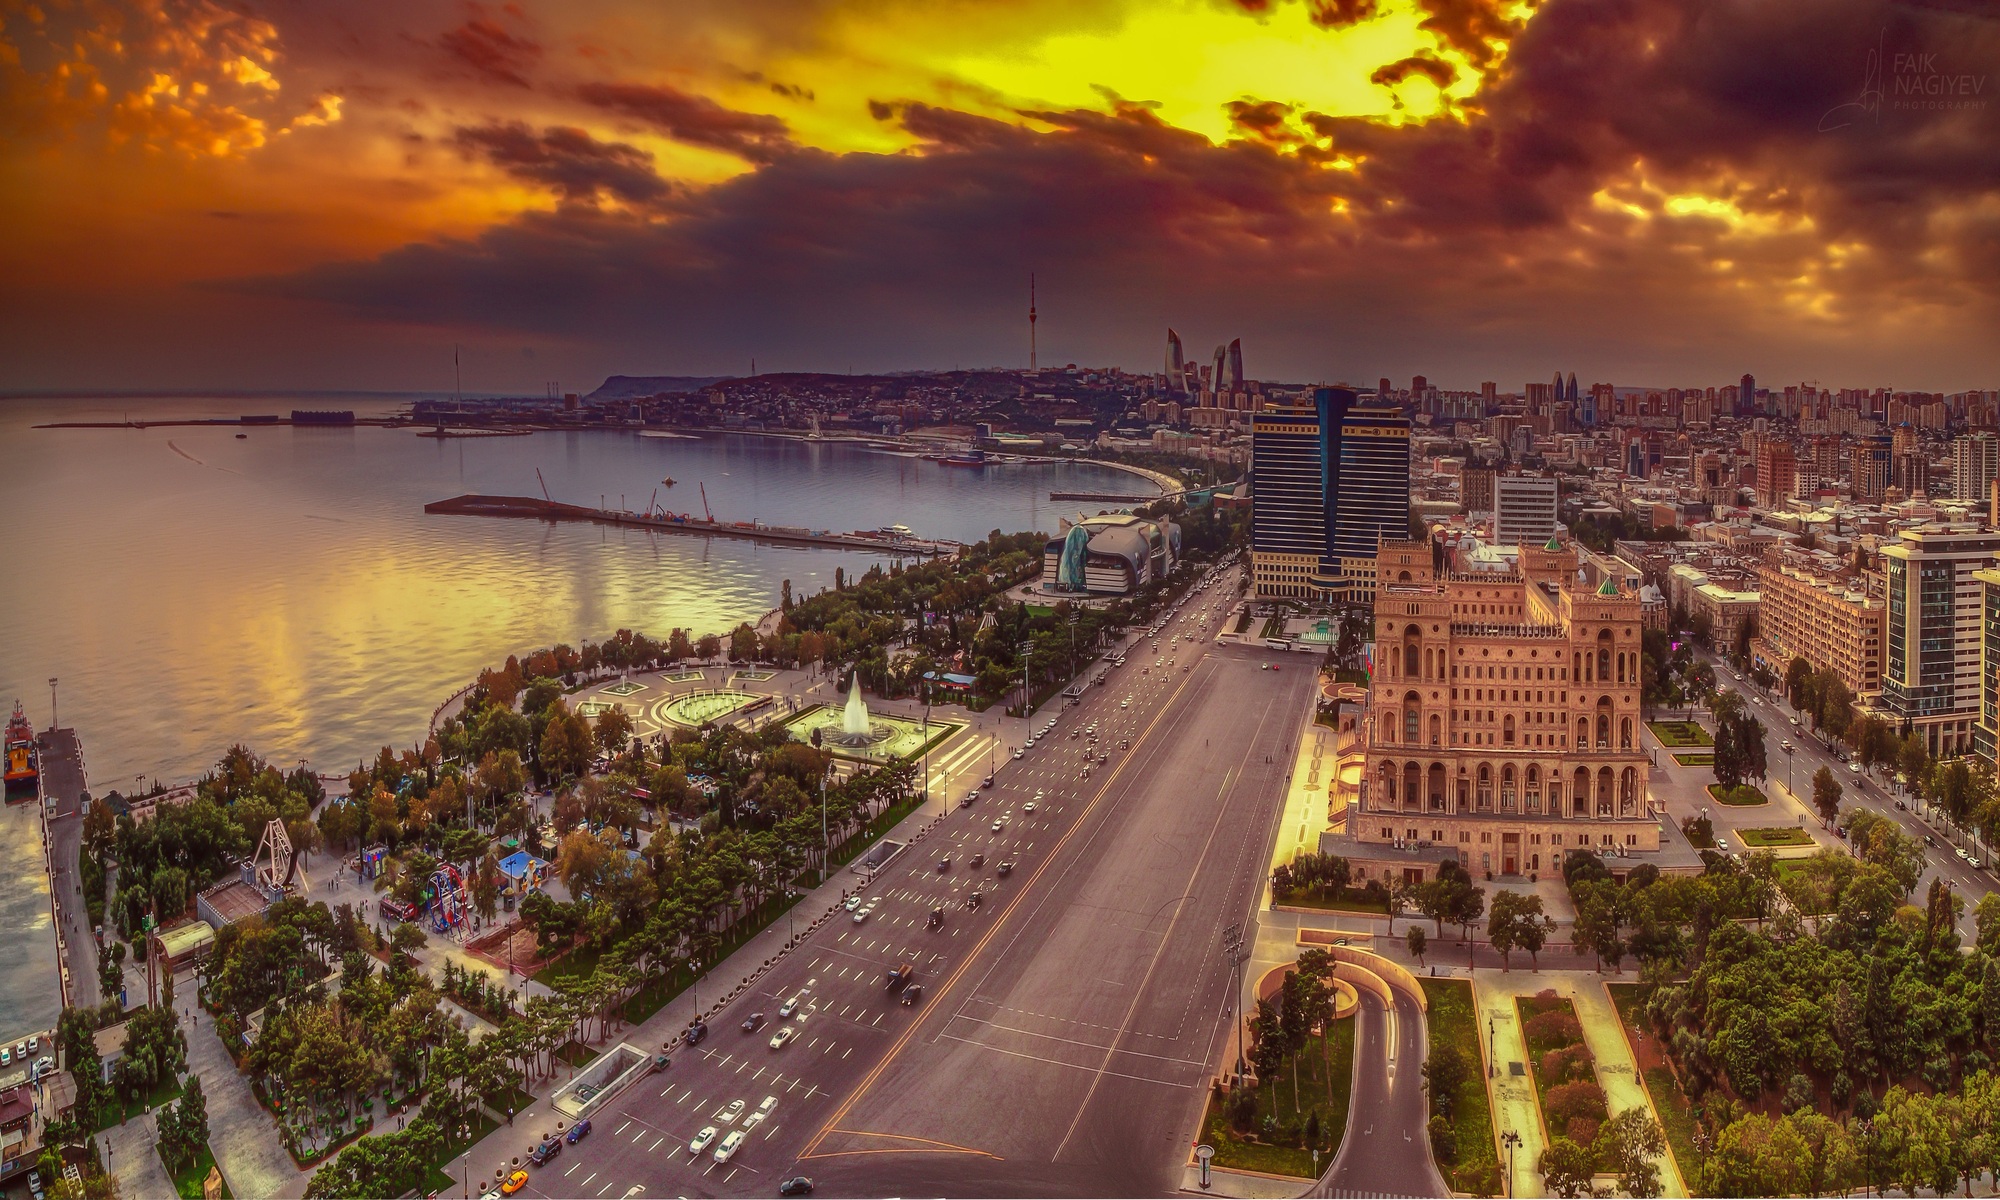 Reasons to visit Azerbaijan